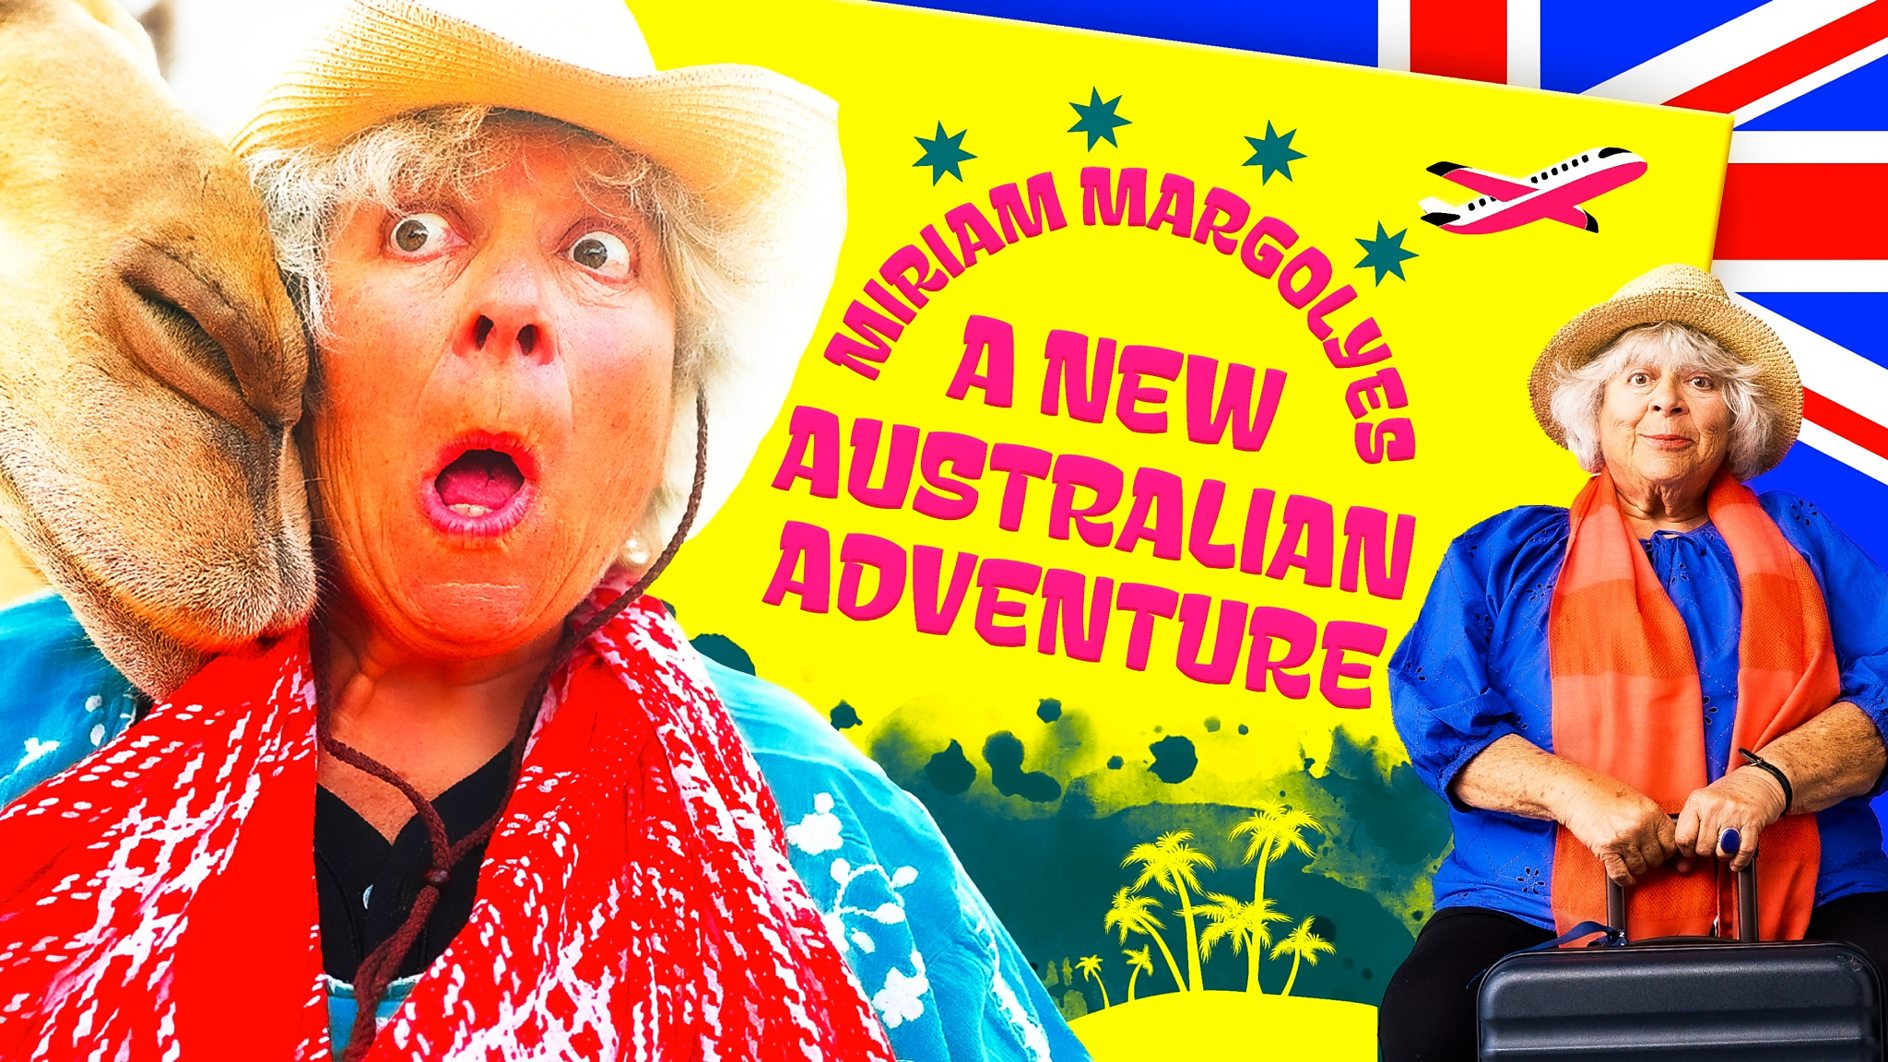 Miriam Margolyes: A New Australian Adventure premieres on BBC Two on August 2